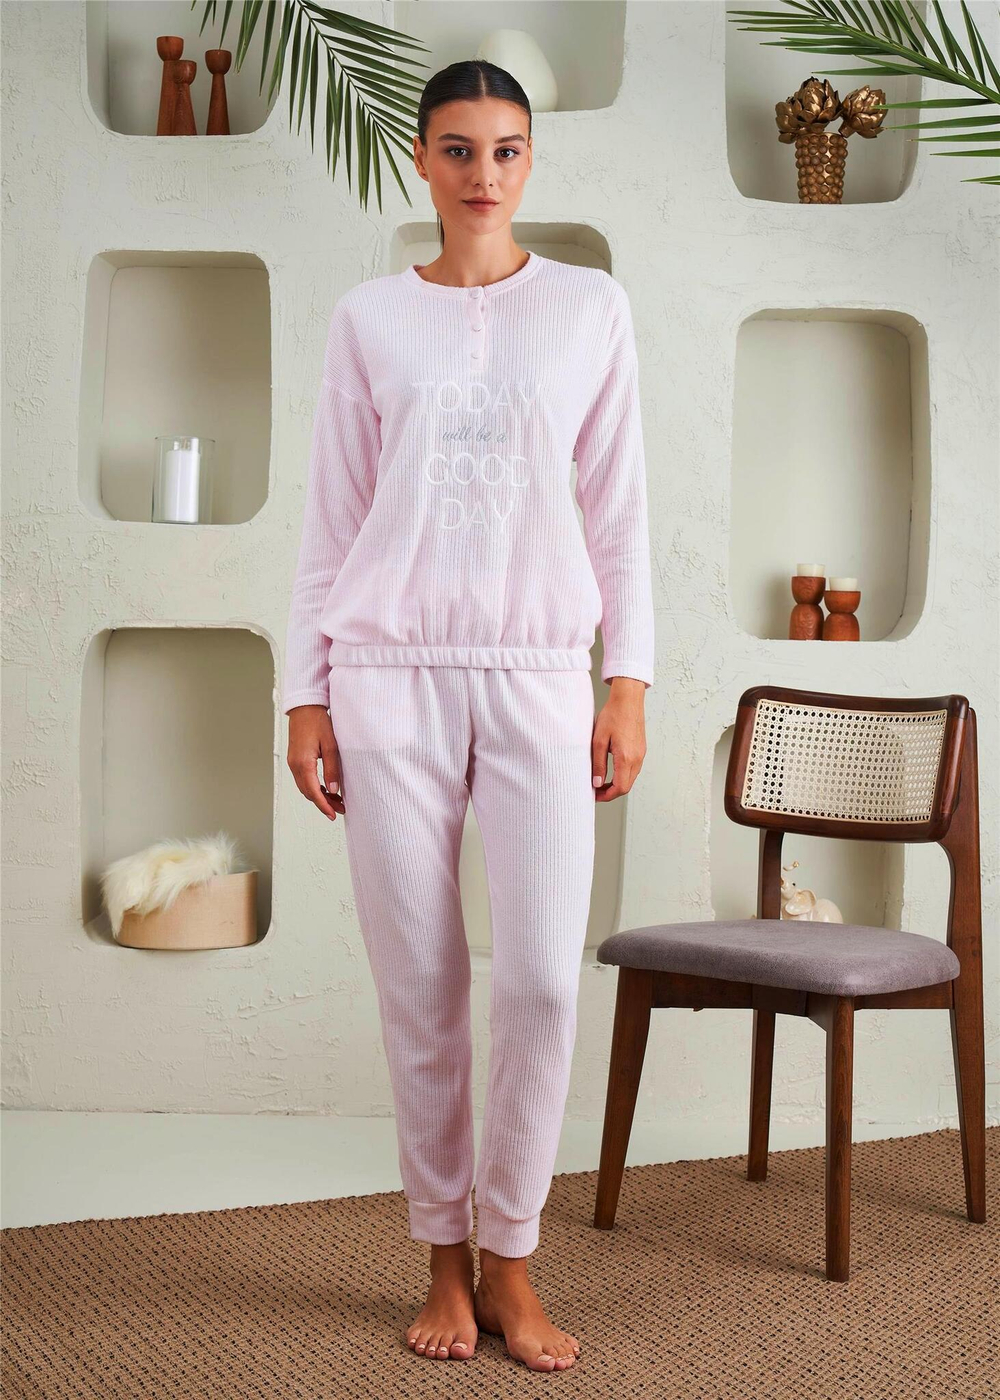 RELAX MODE - Женская пижама с брюками - 10715